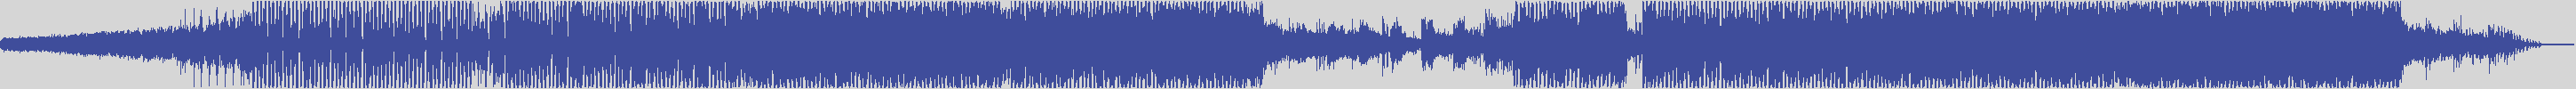 upr [uprGOLD14] Chris Shape - Mind [Original Mix] audio wave form